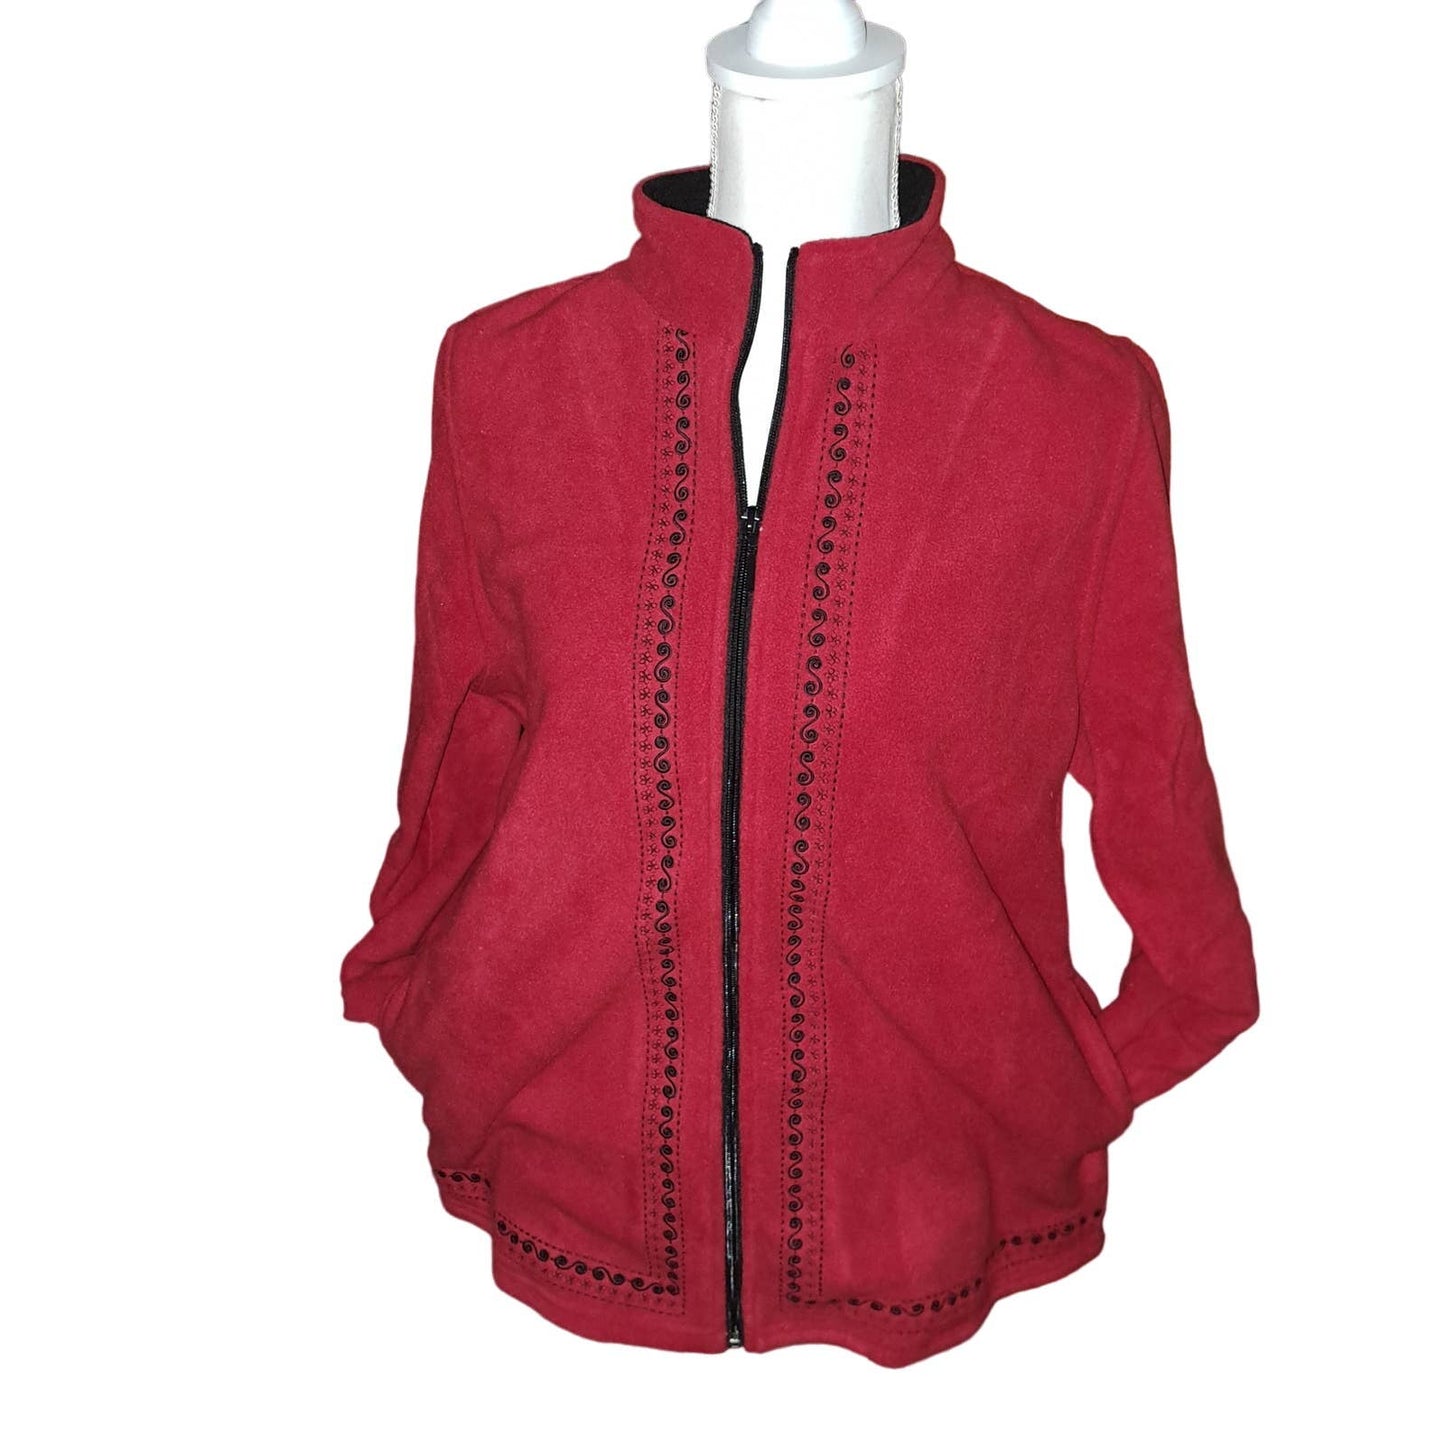 NWT- Sport Savvy Zip Front Fleece Embroidered Trim Warm Up Set Medium, Red/Black